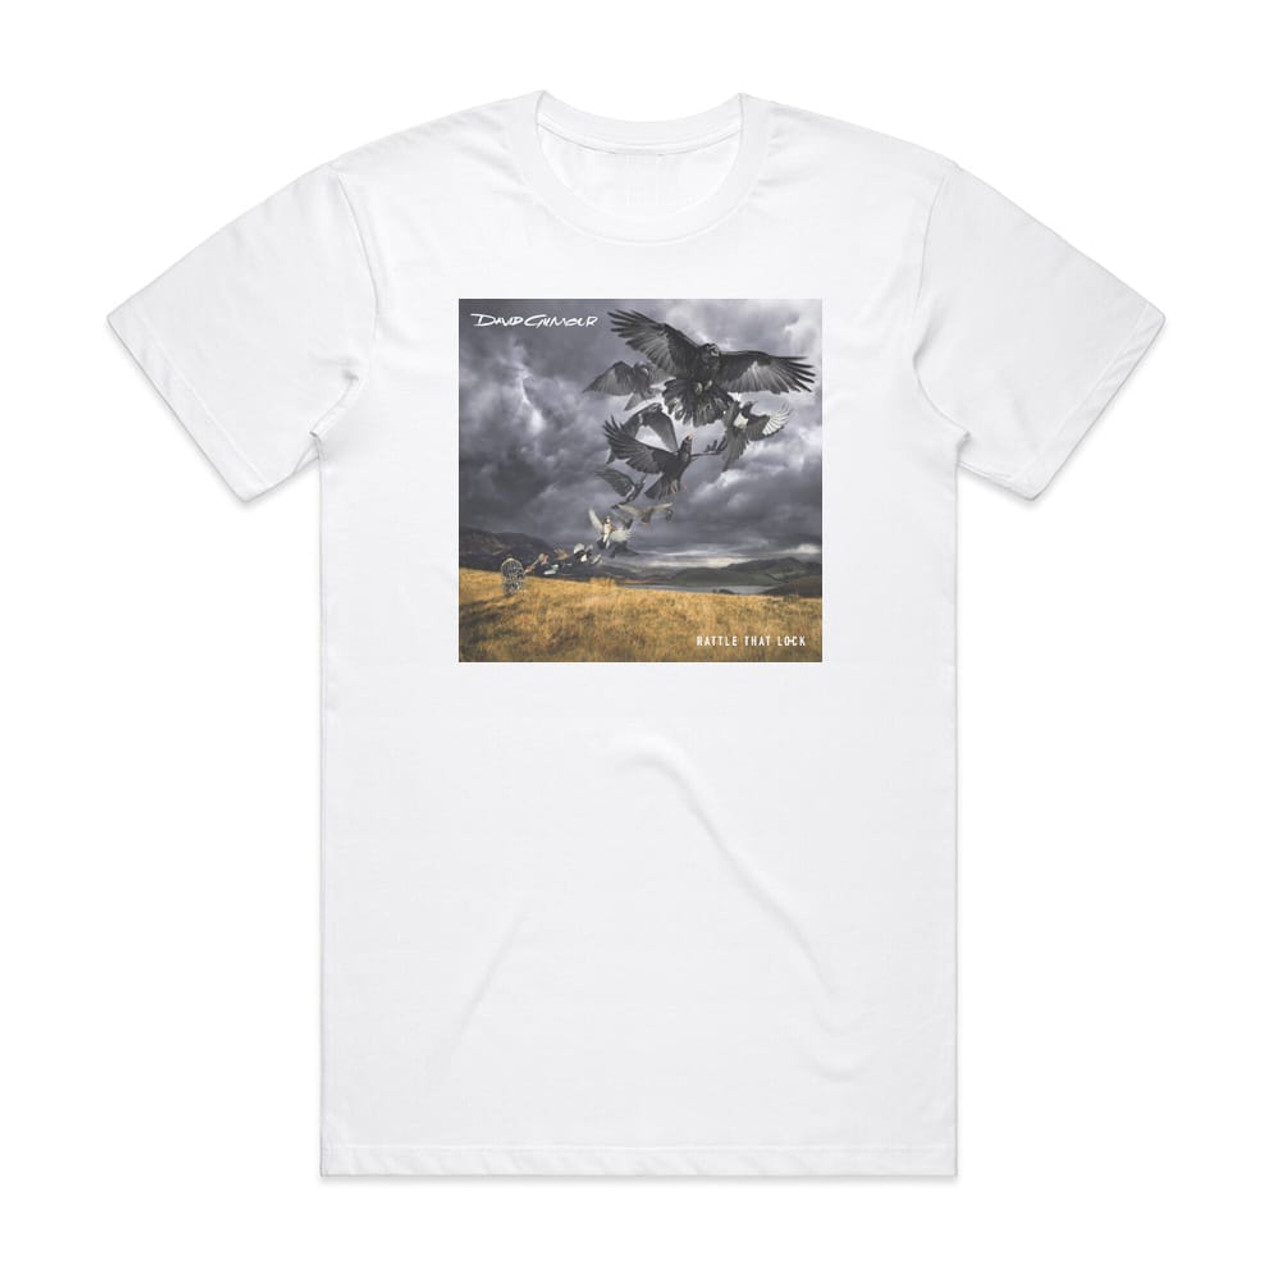 David Gilmour Rattle That Lock Album Cover T-Shirt White